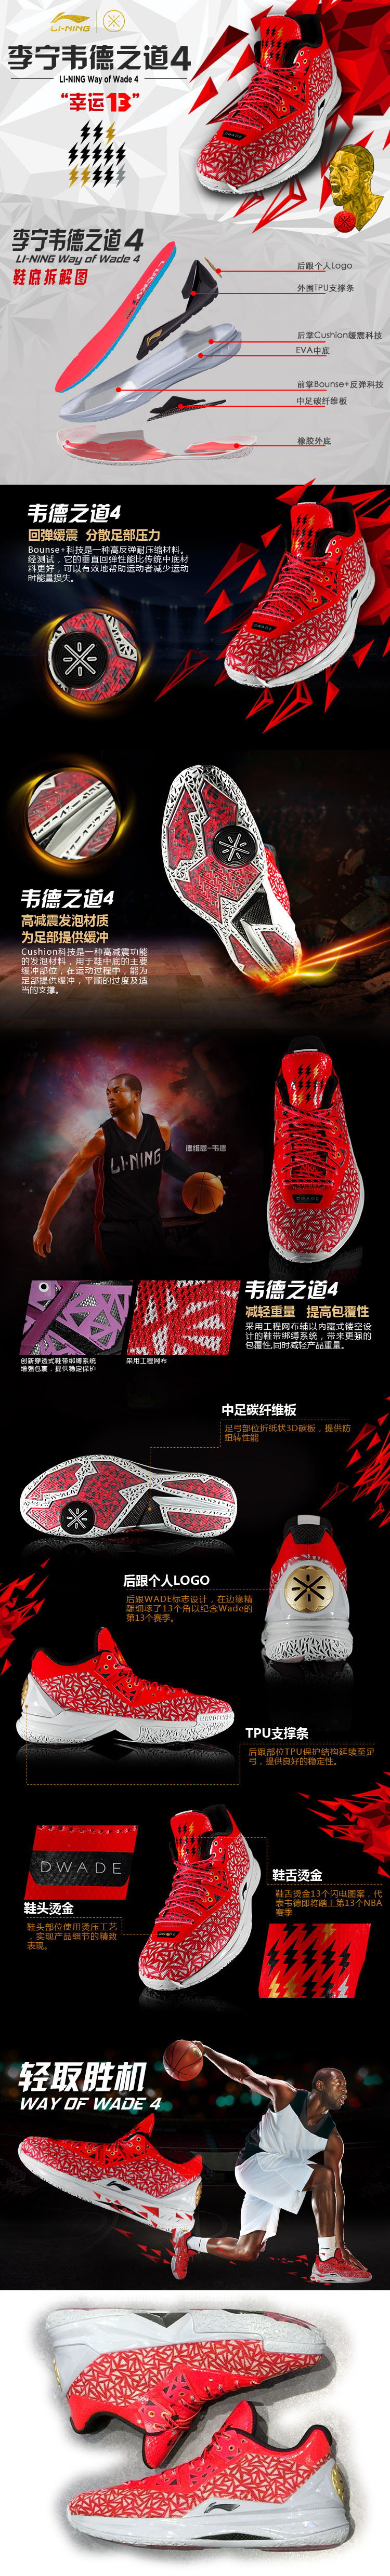 Li-Ning WoW4 Way of Wade 4 "Lucky 13" Premium Basketball Shoes